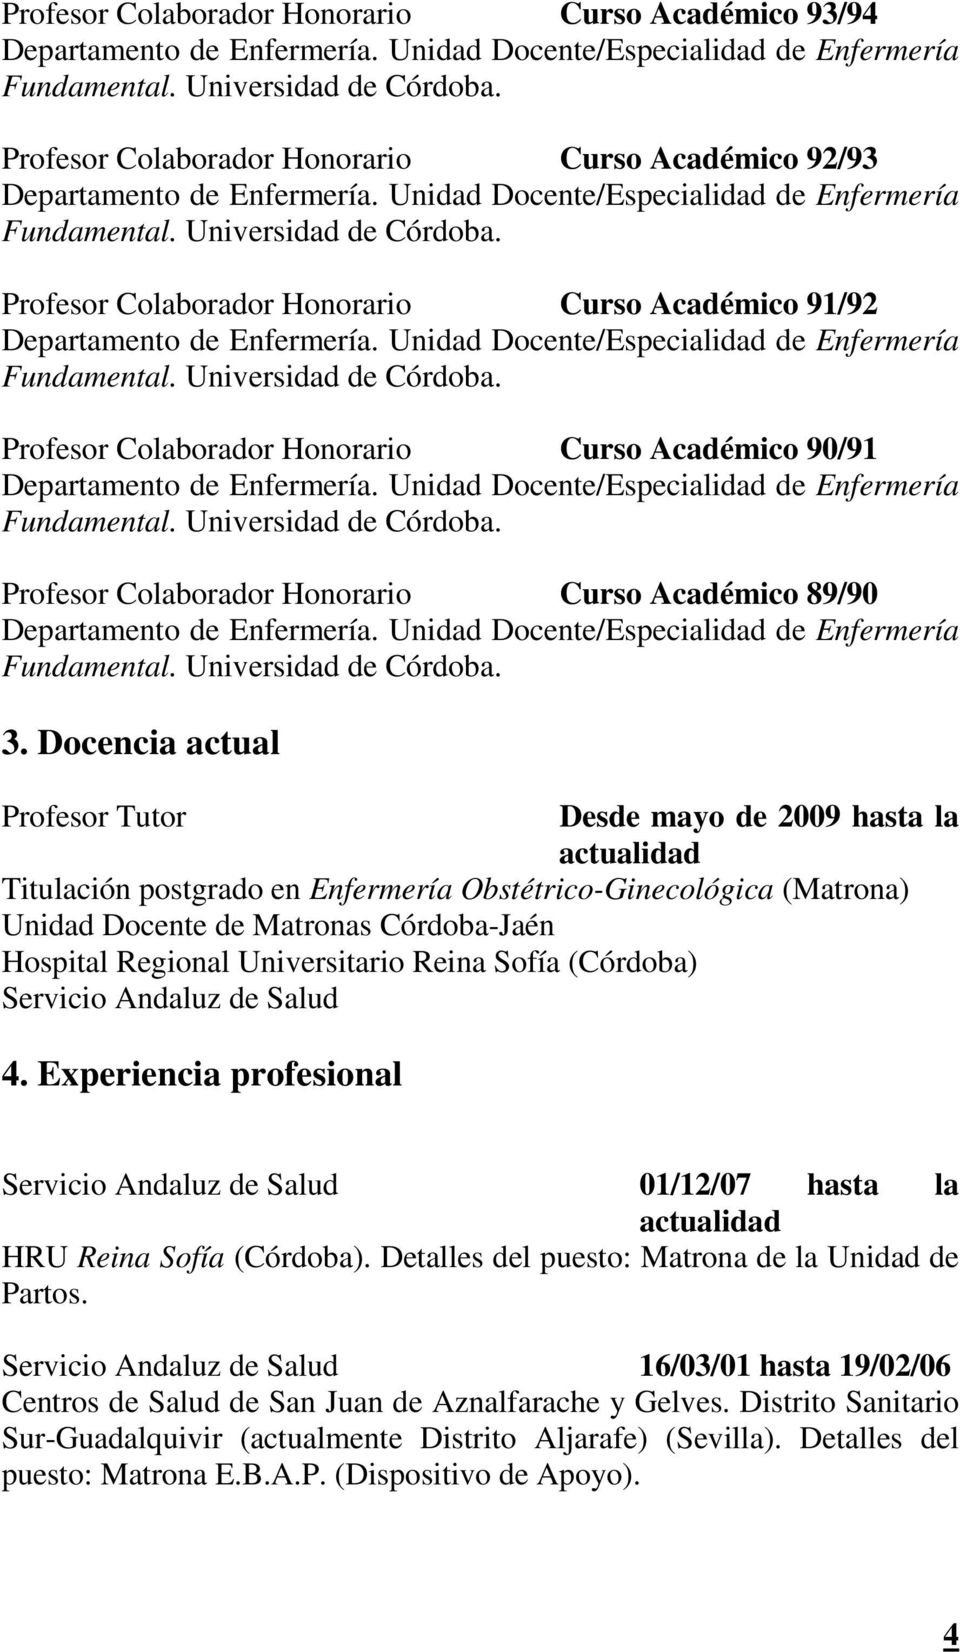 Profesor Colaborador Honorario Curso Académico 91/92 Departamento de Enfermería. Unidad Docente/Especialidad de Enfermería Fundamental. Universidad de Córdoba.